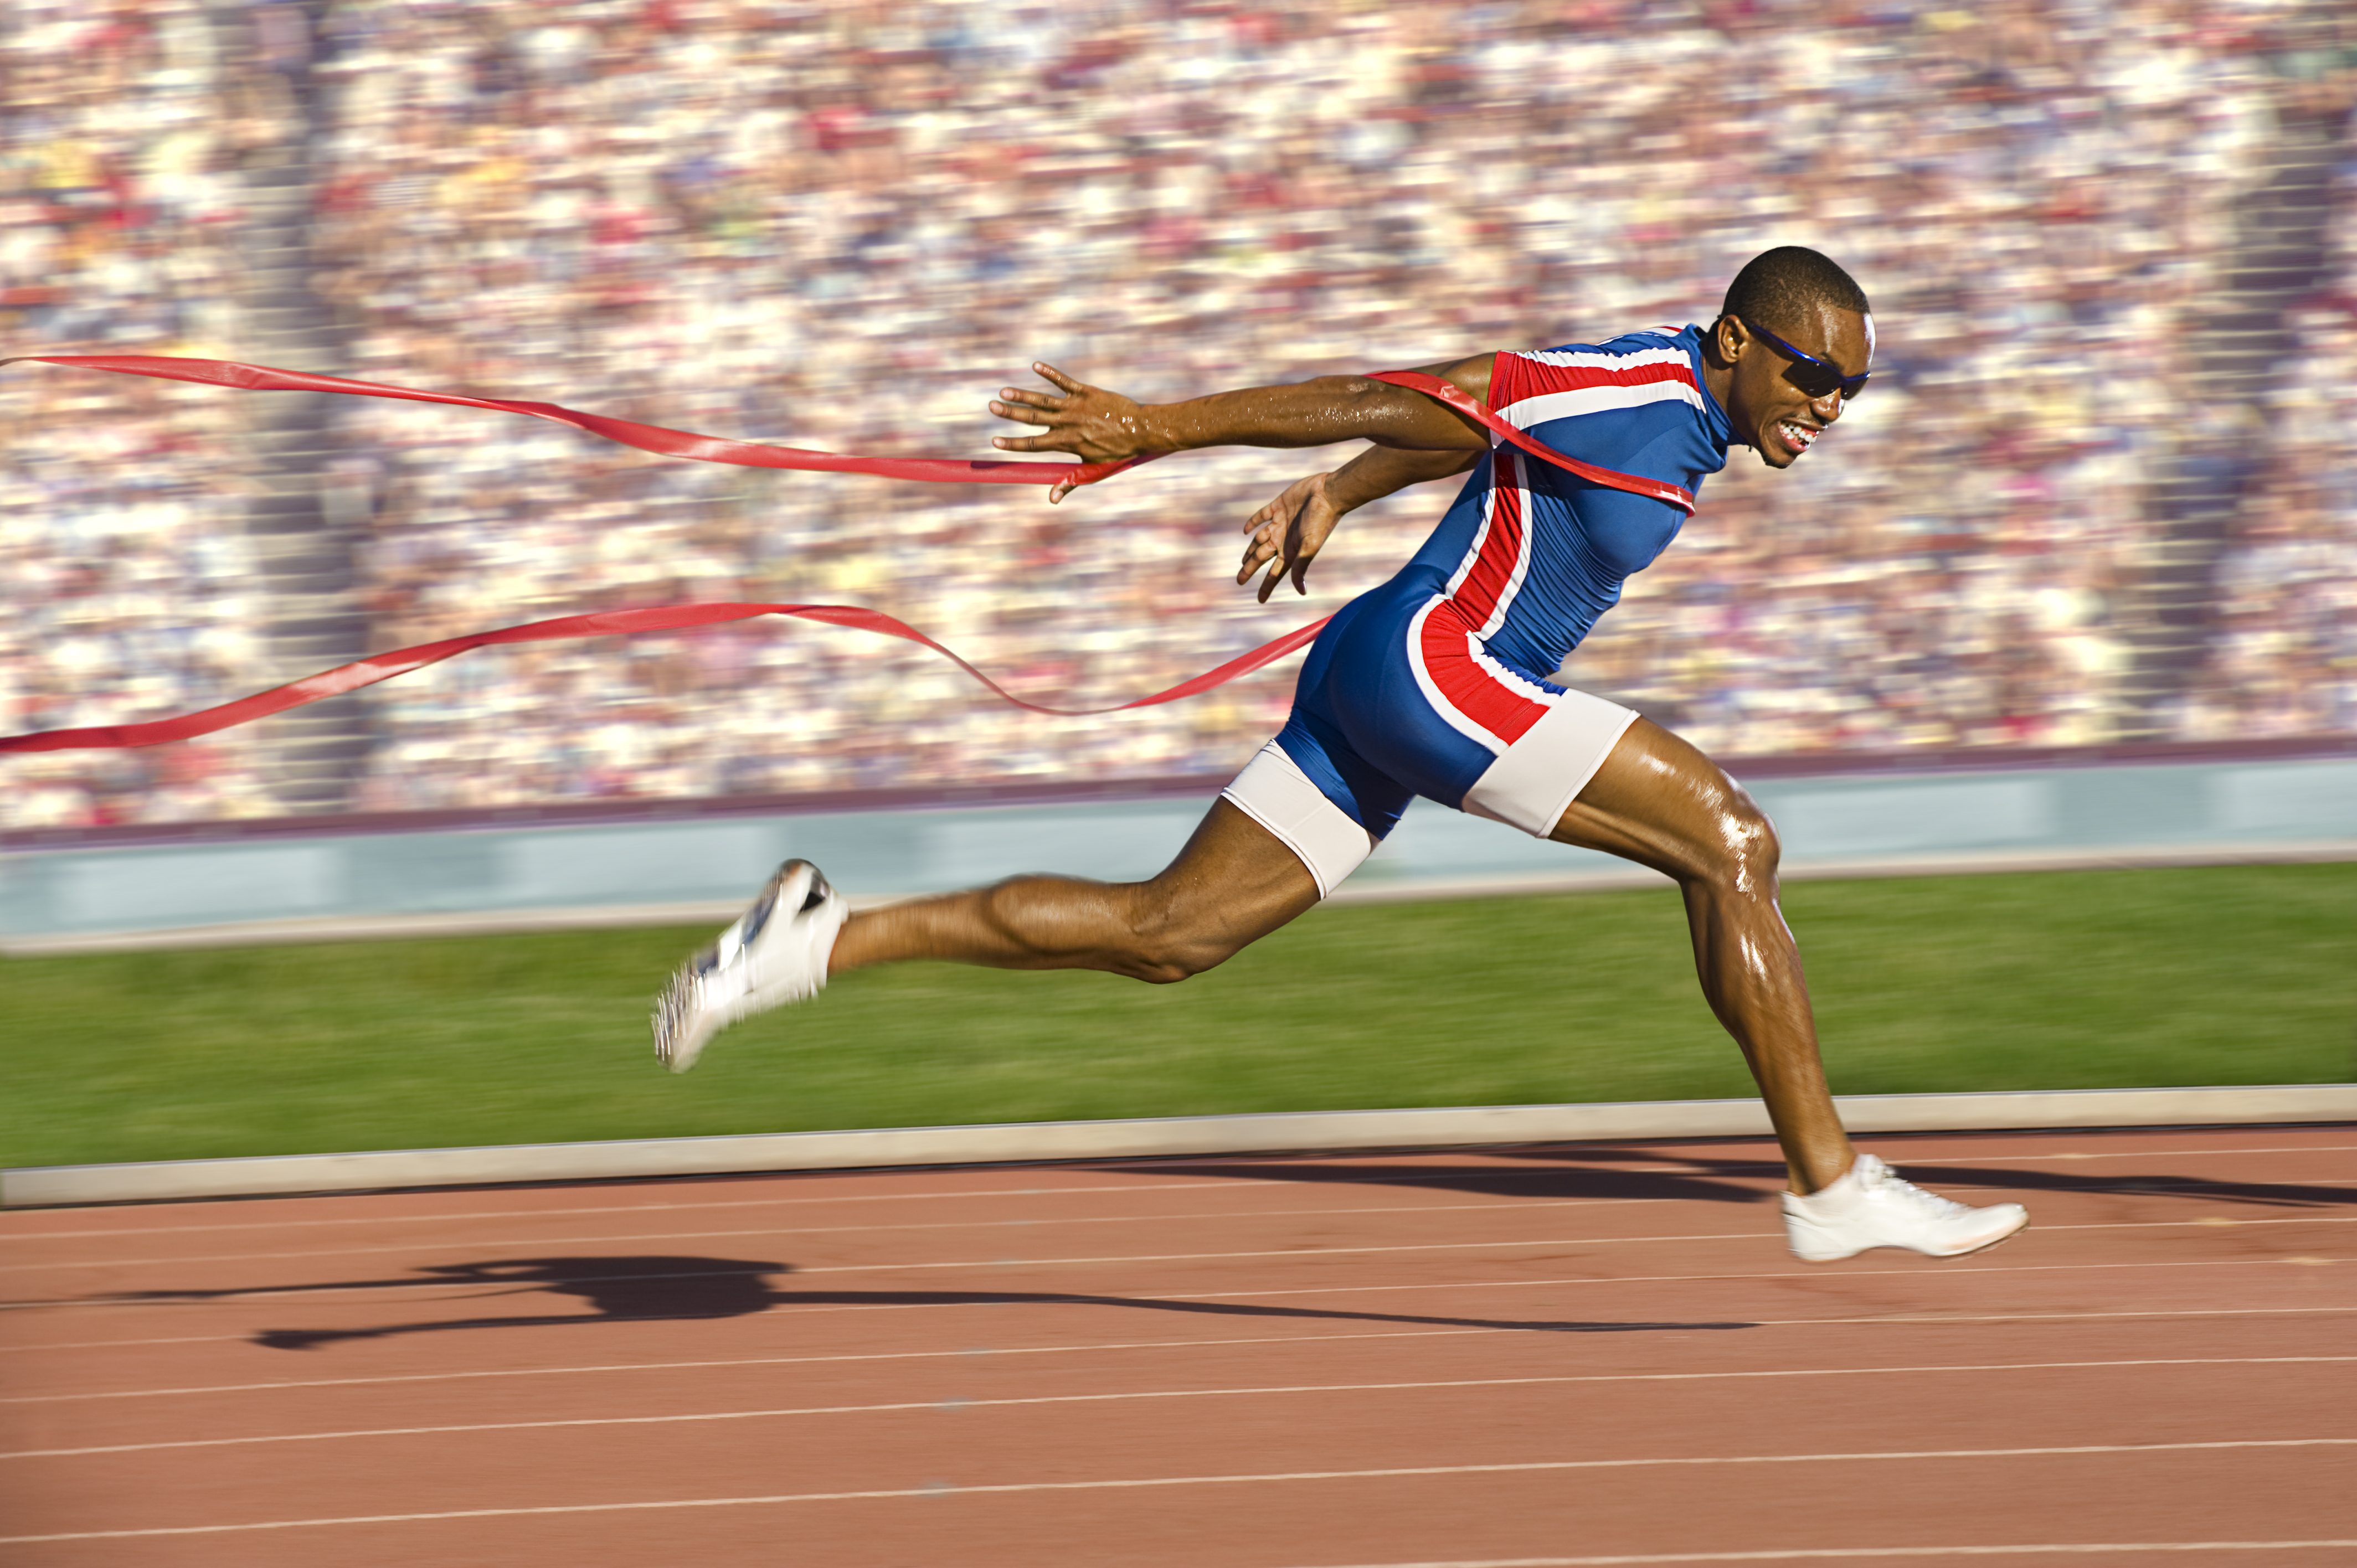 Sprinter running on track in athletics stadium